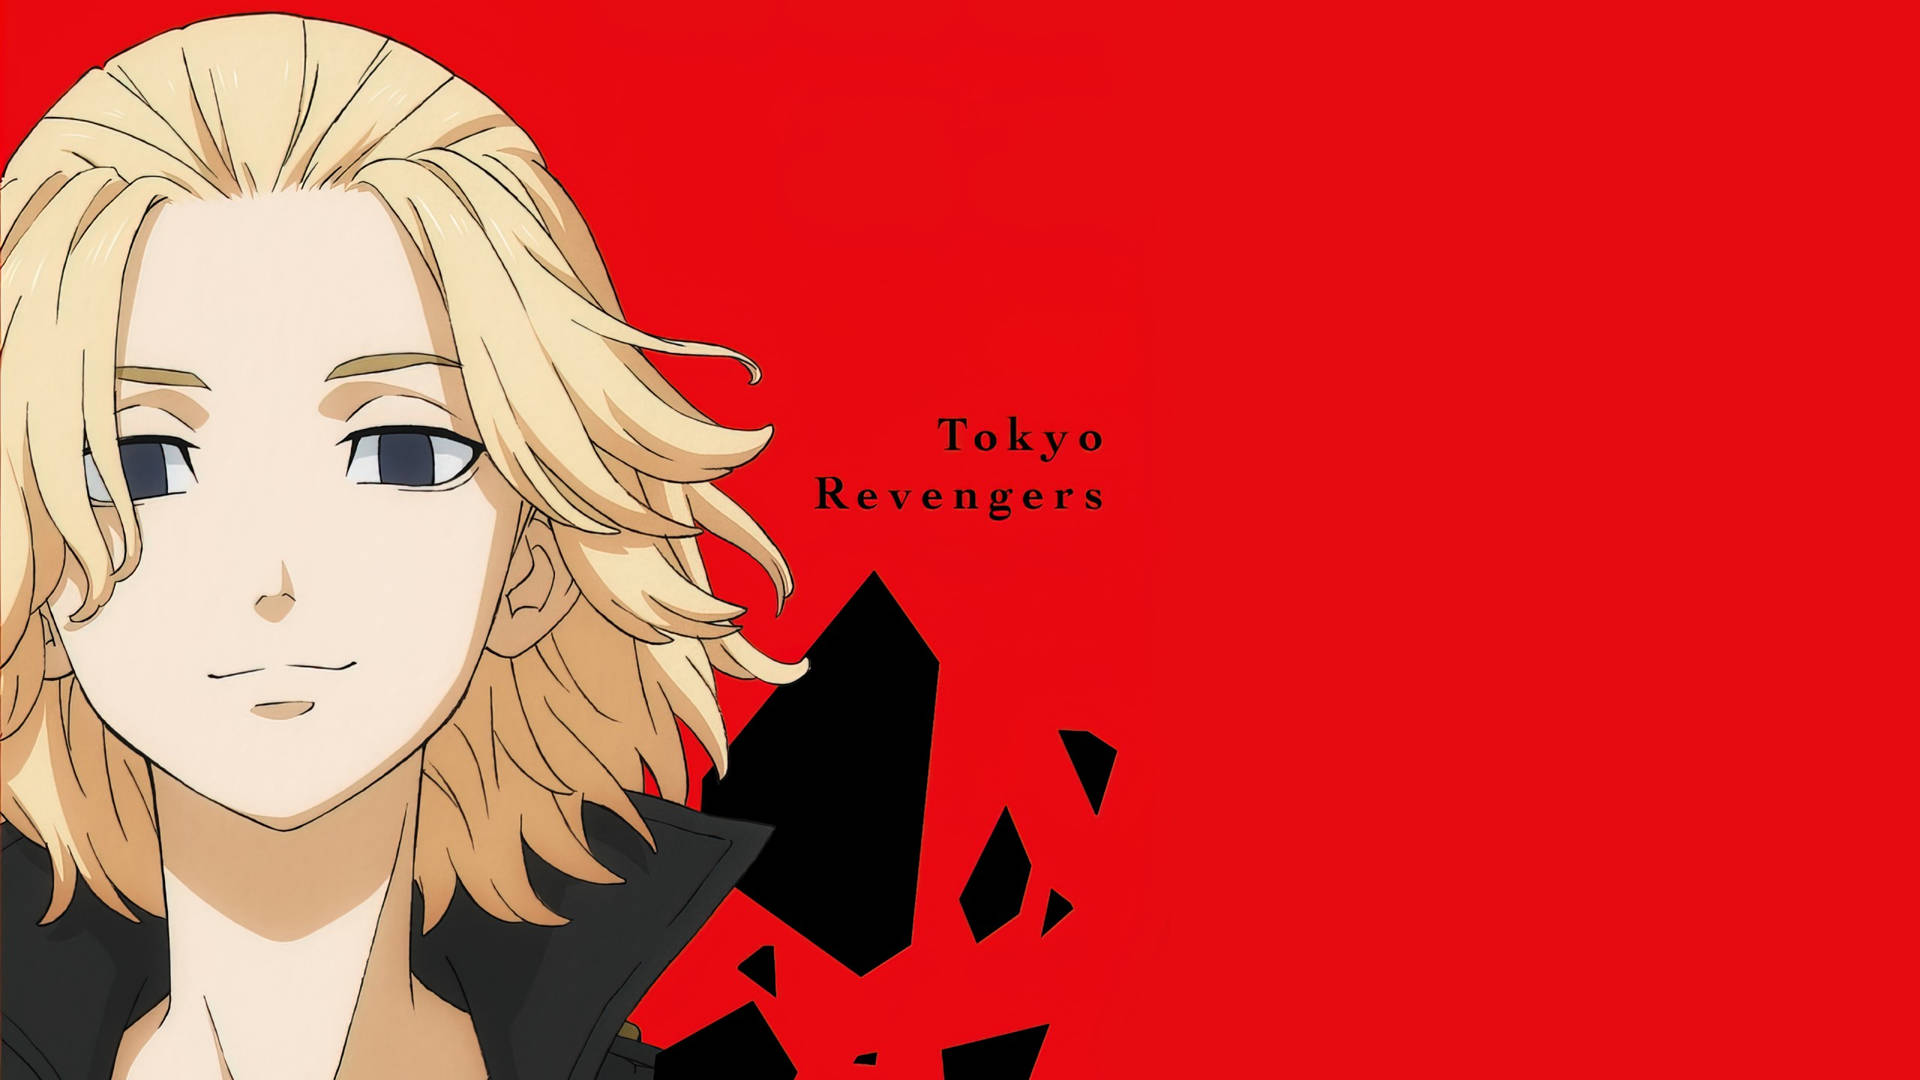 Manjiro From Tokyo Revengers Manga On Red Background Background